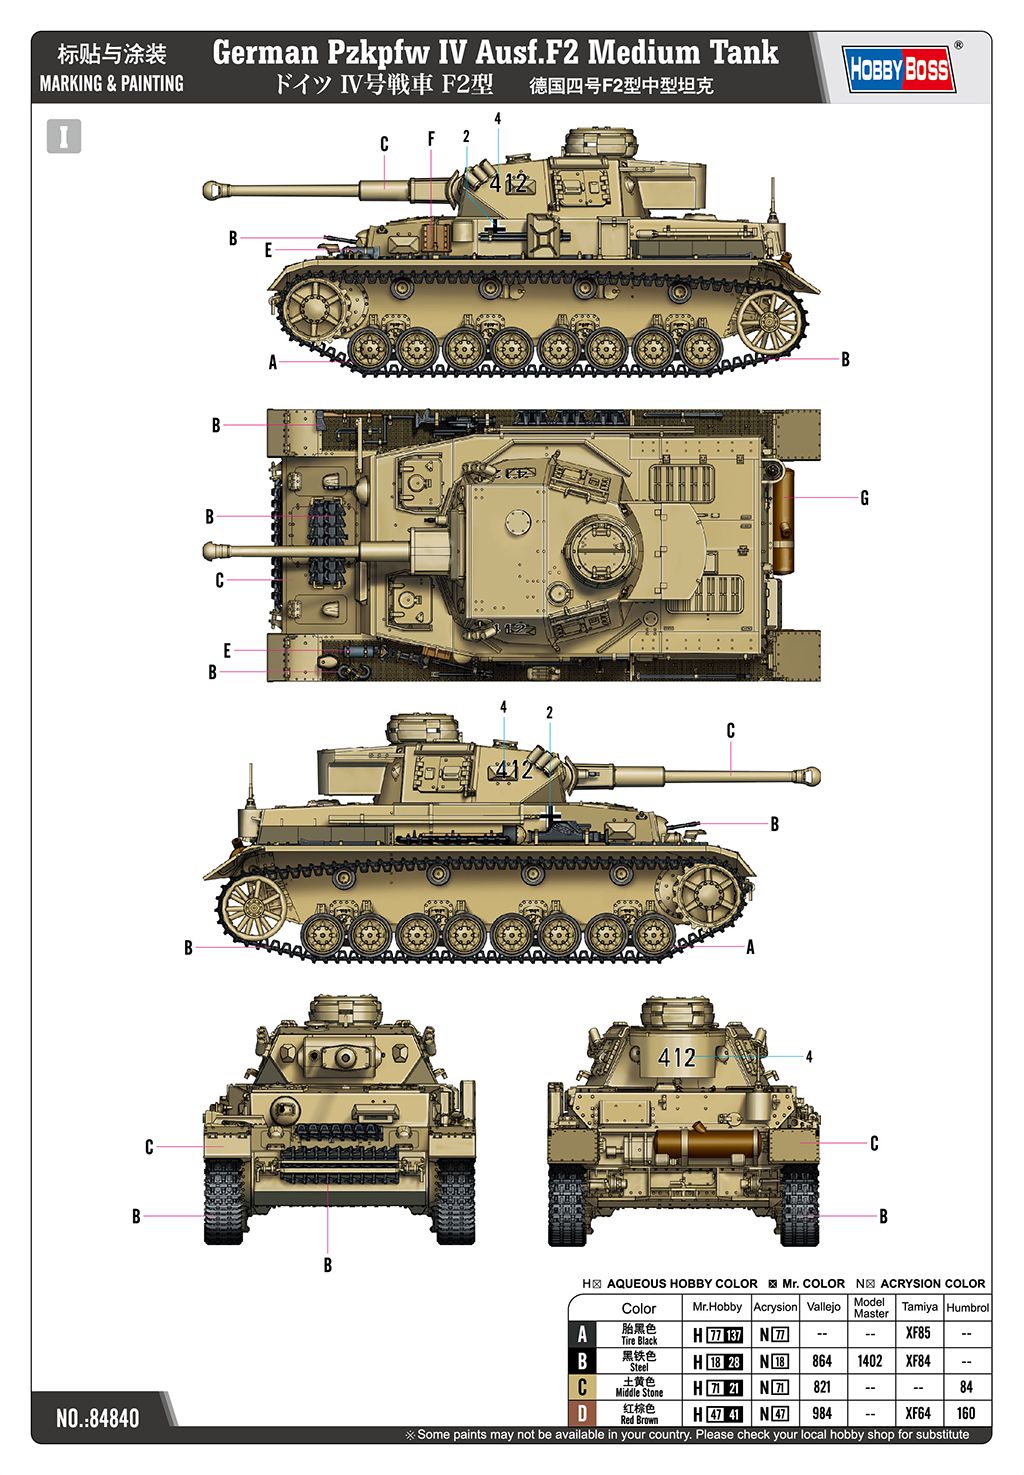 HobbyBoss 84840 - German Sd.Kfz.161/1 PzKpfw IV Ausf F2 Medium Tank